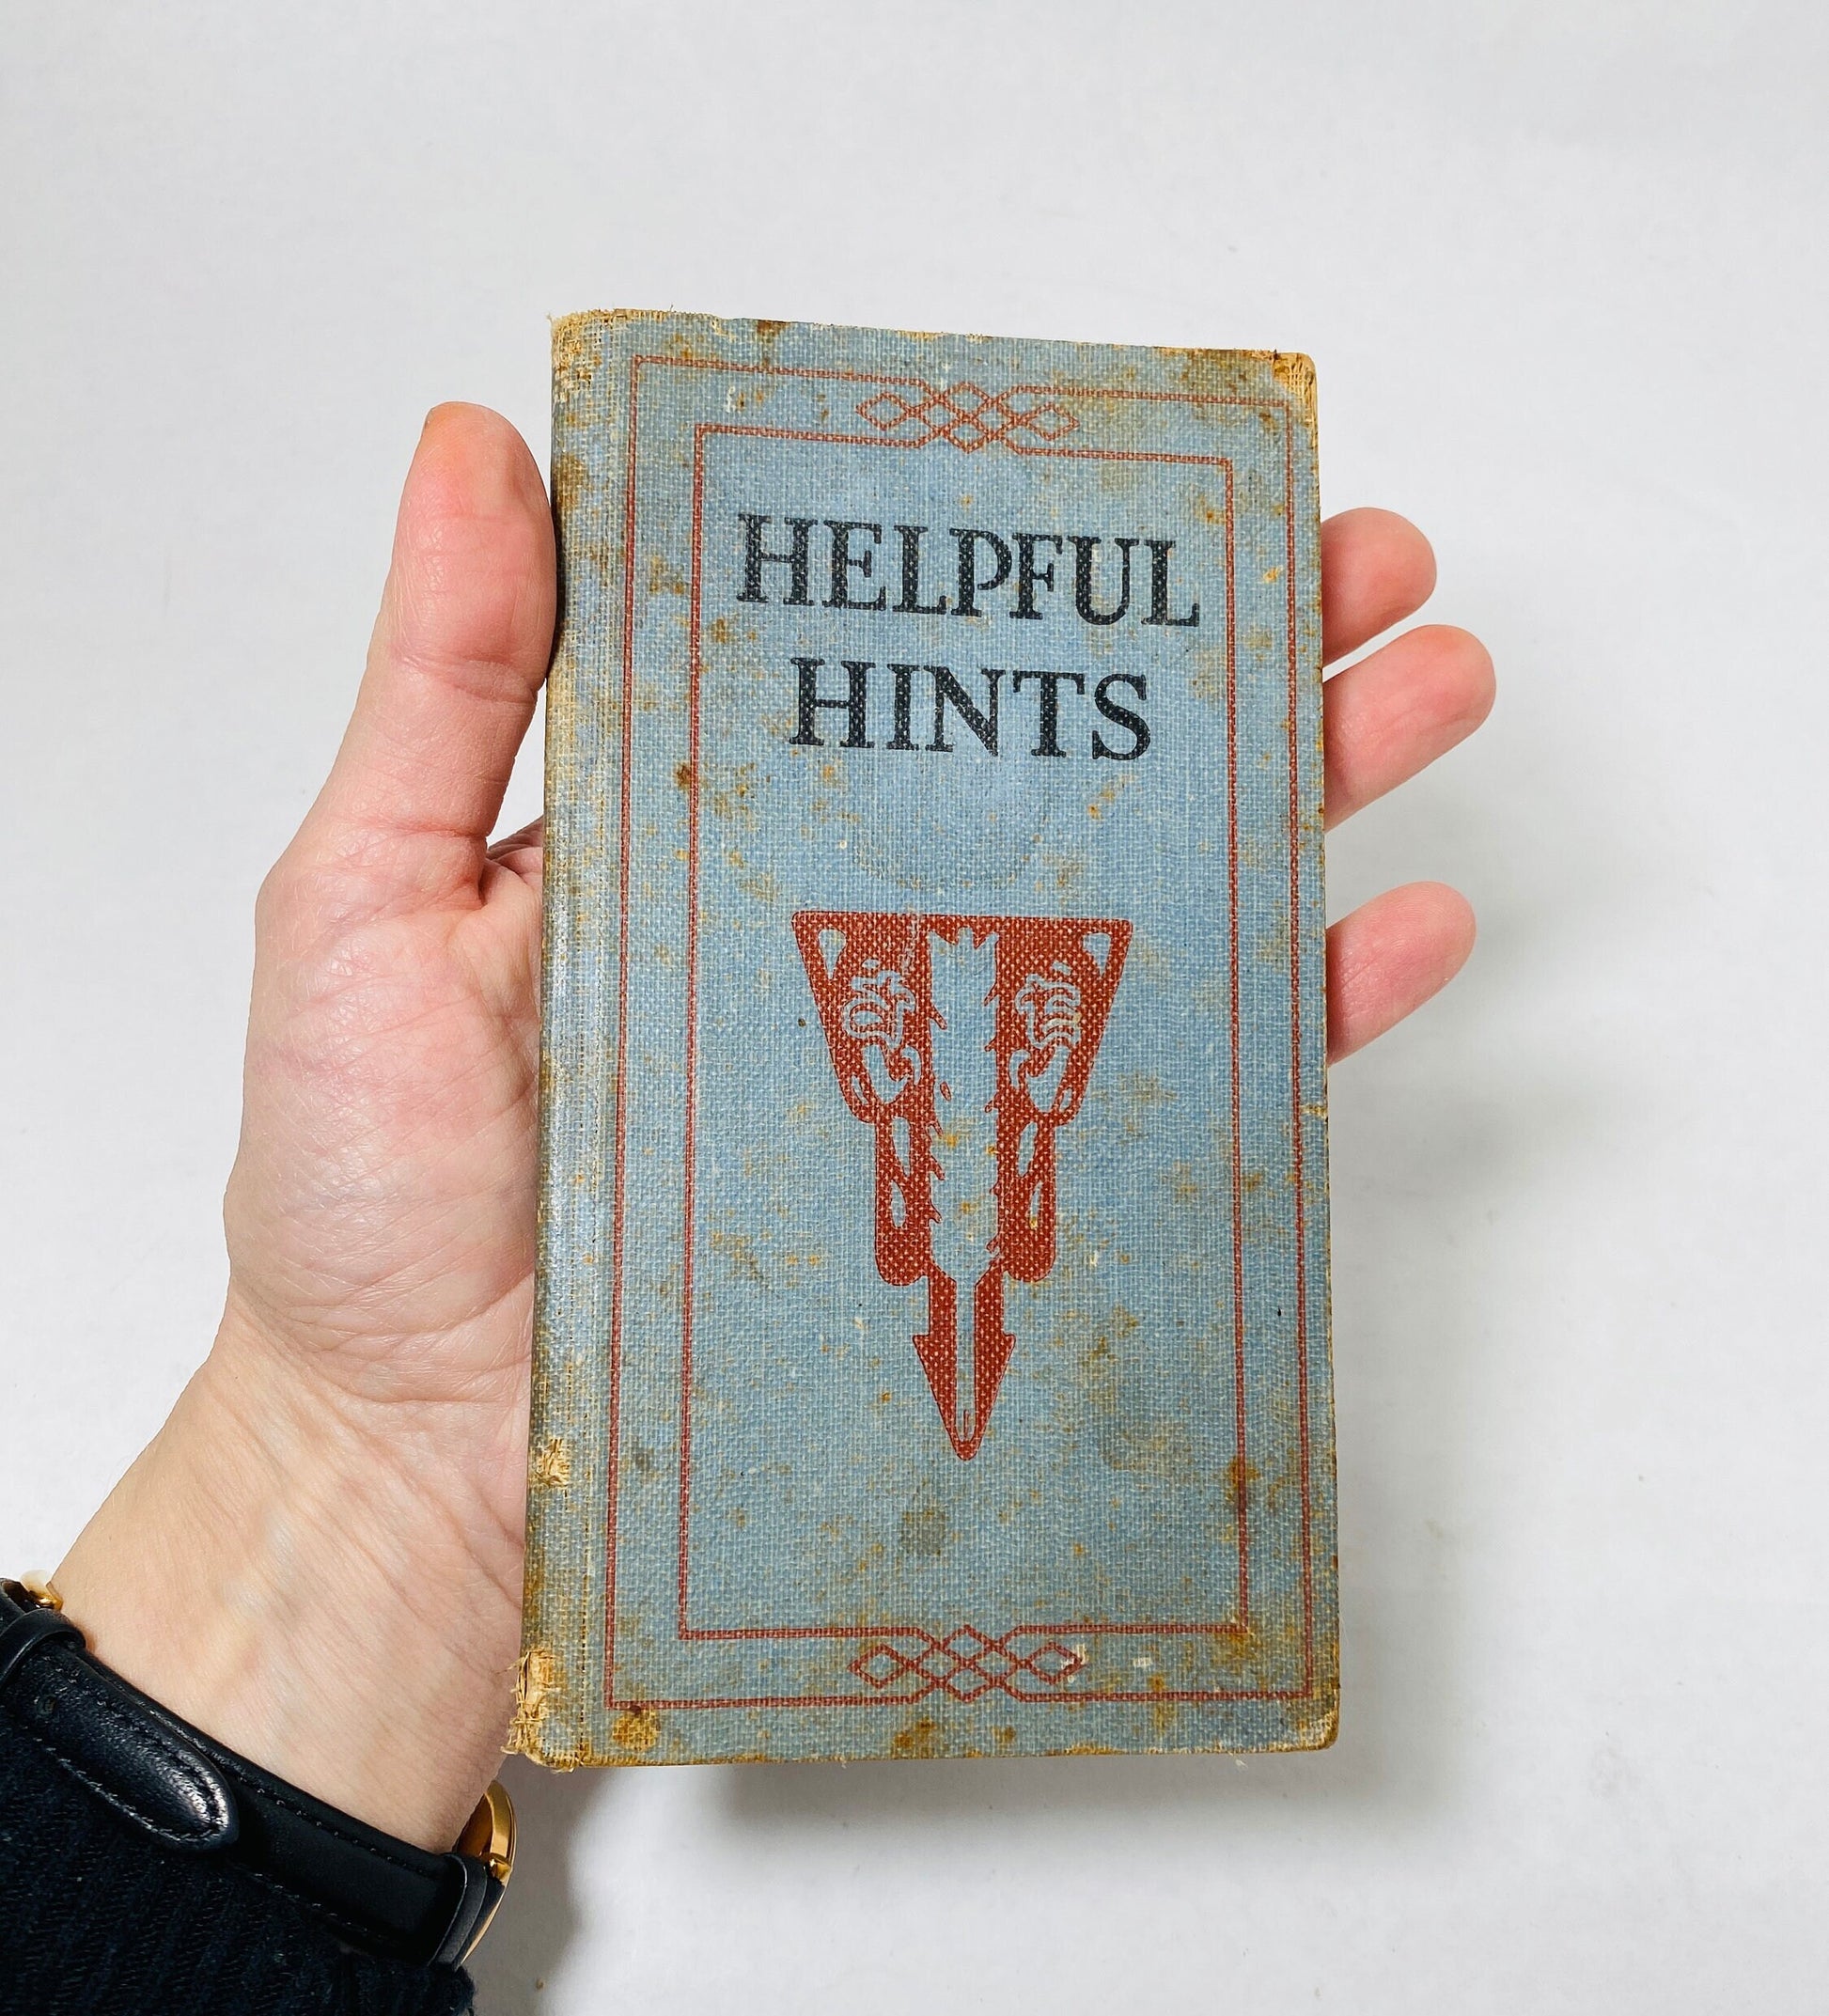 1911 vintage grammar tool dictionary small miniature antique best pocket book by James Champlin Fernald Funk & Wagnalls